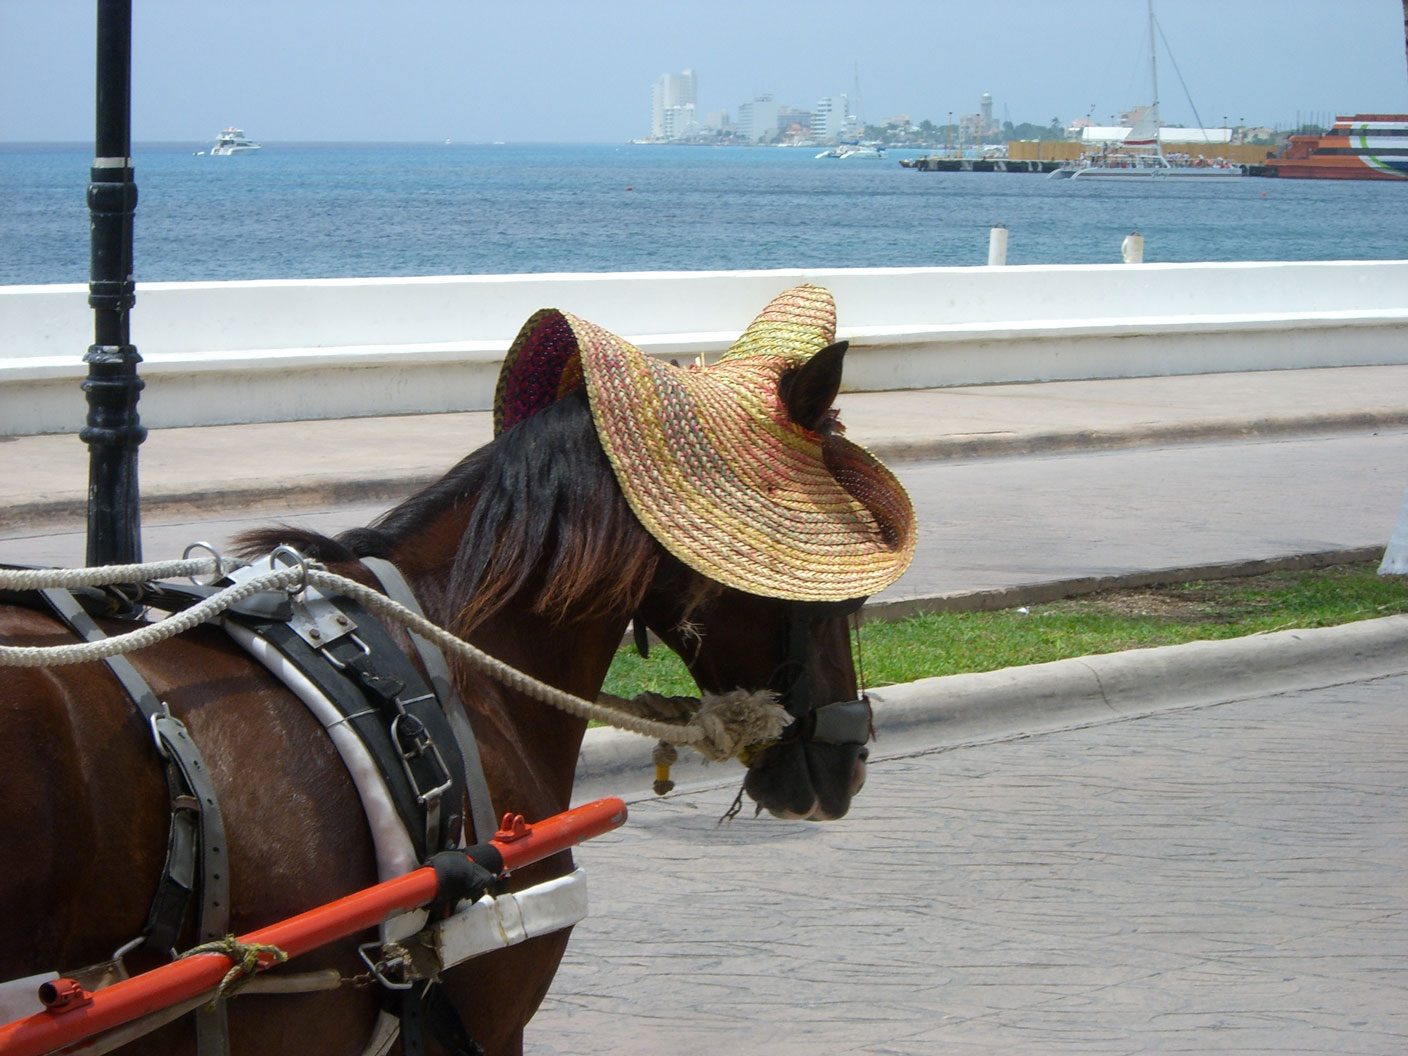 Sweet horse... hat